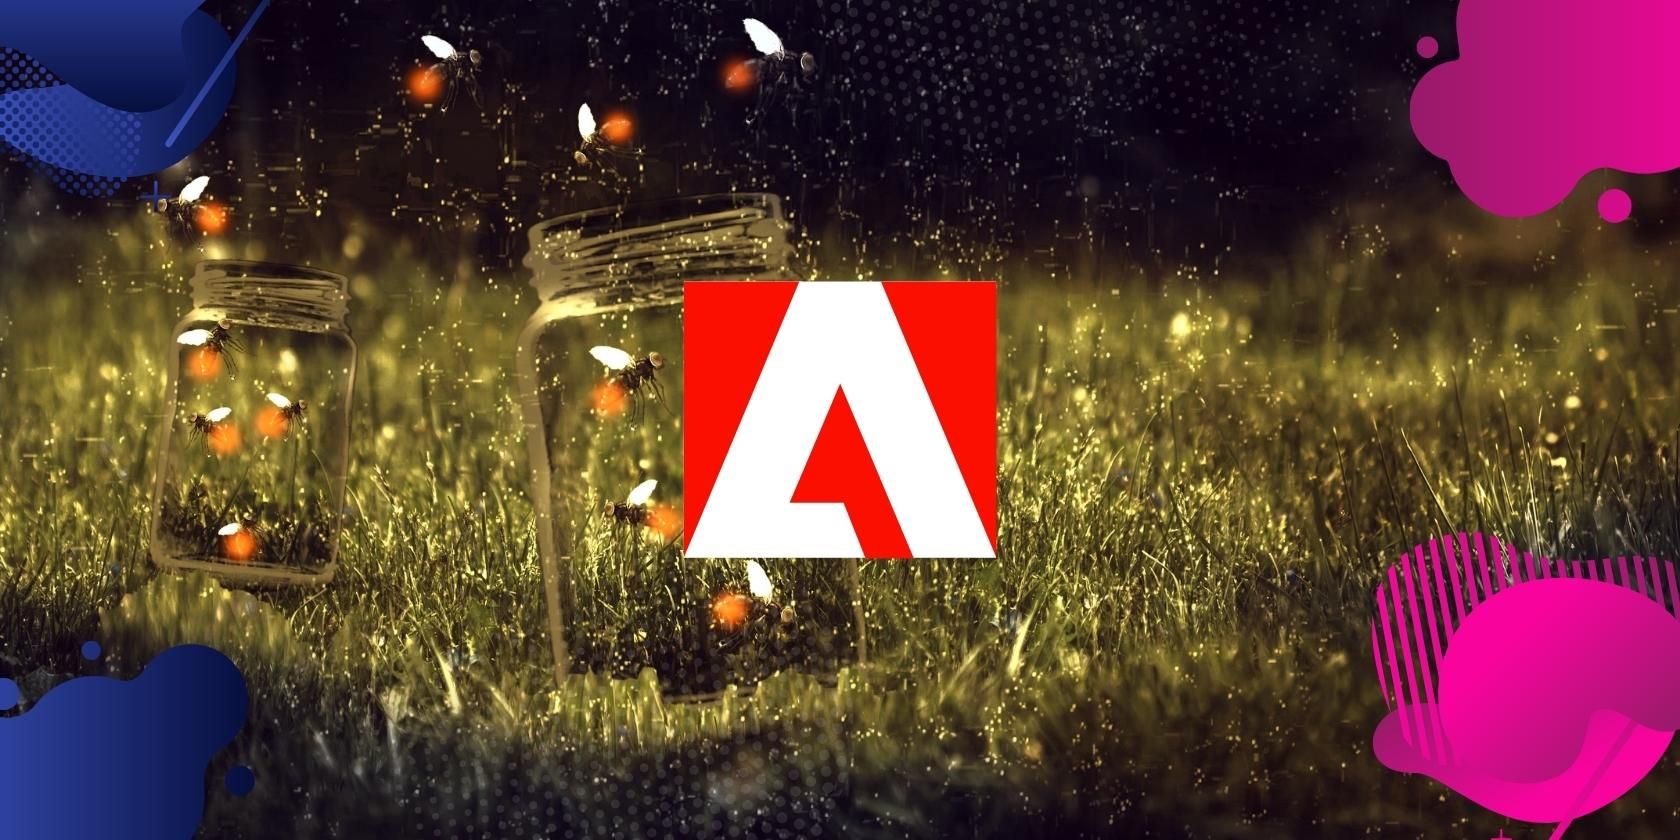 Jar of fireflies in field with Adobe logo overlaid.